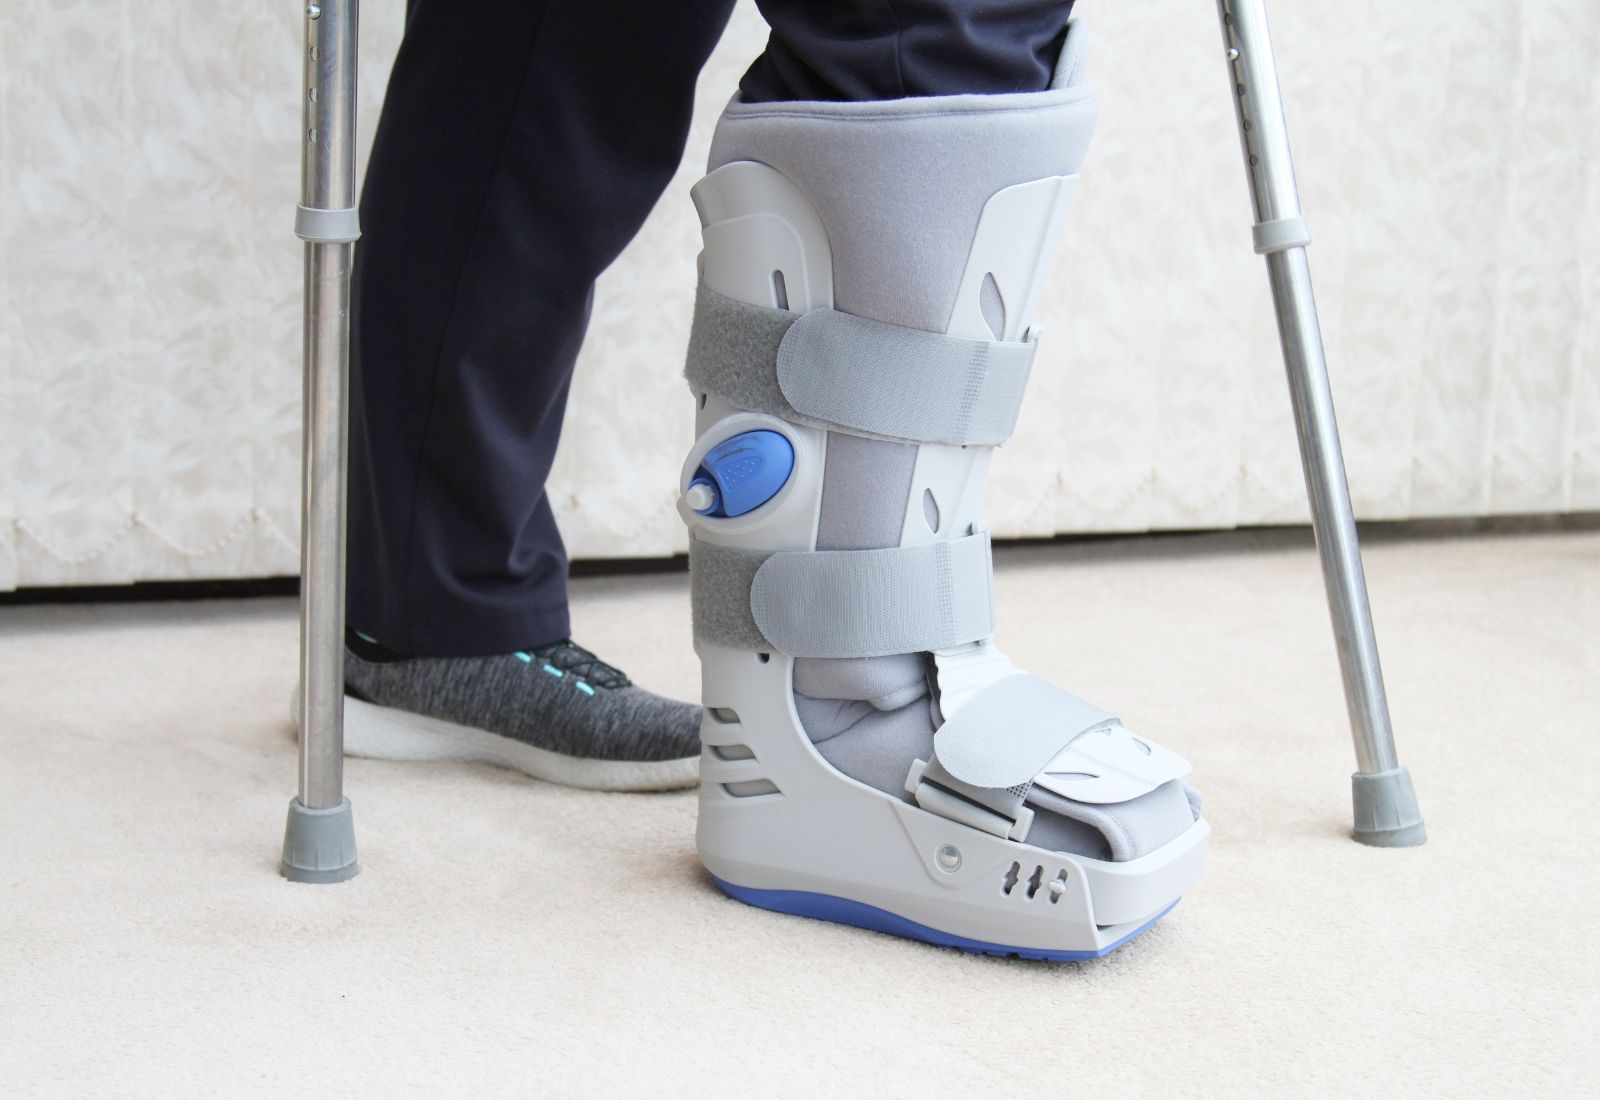 Broken Leg Injury - Workers' Compensation